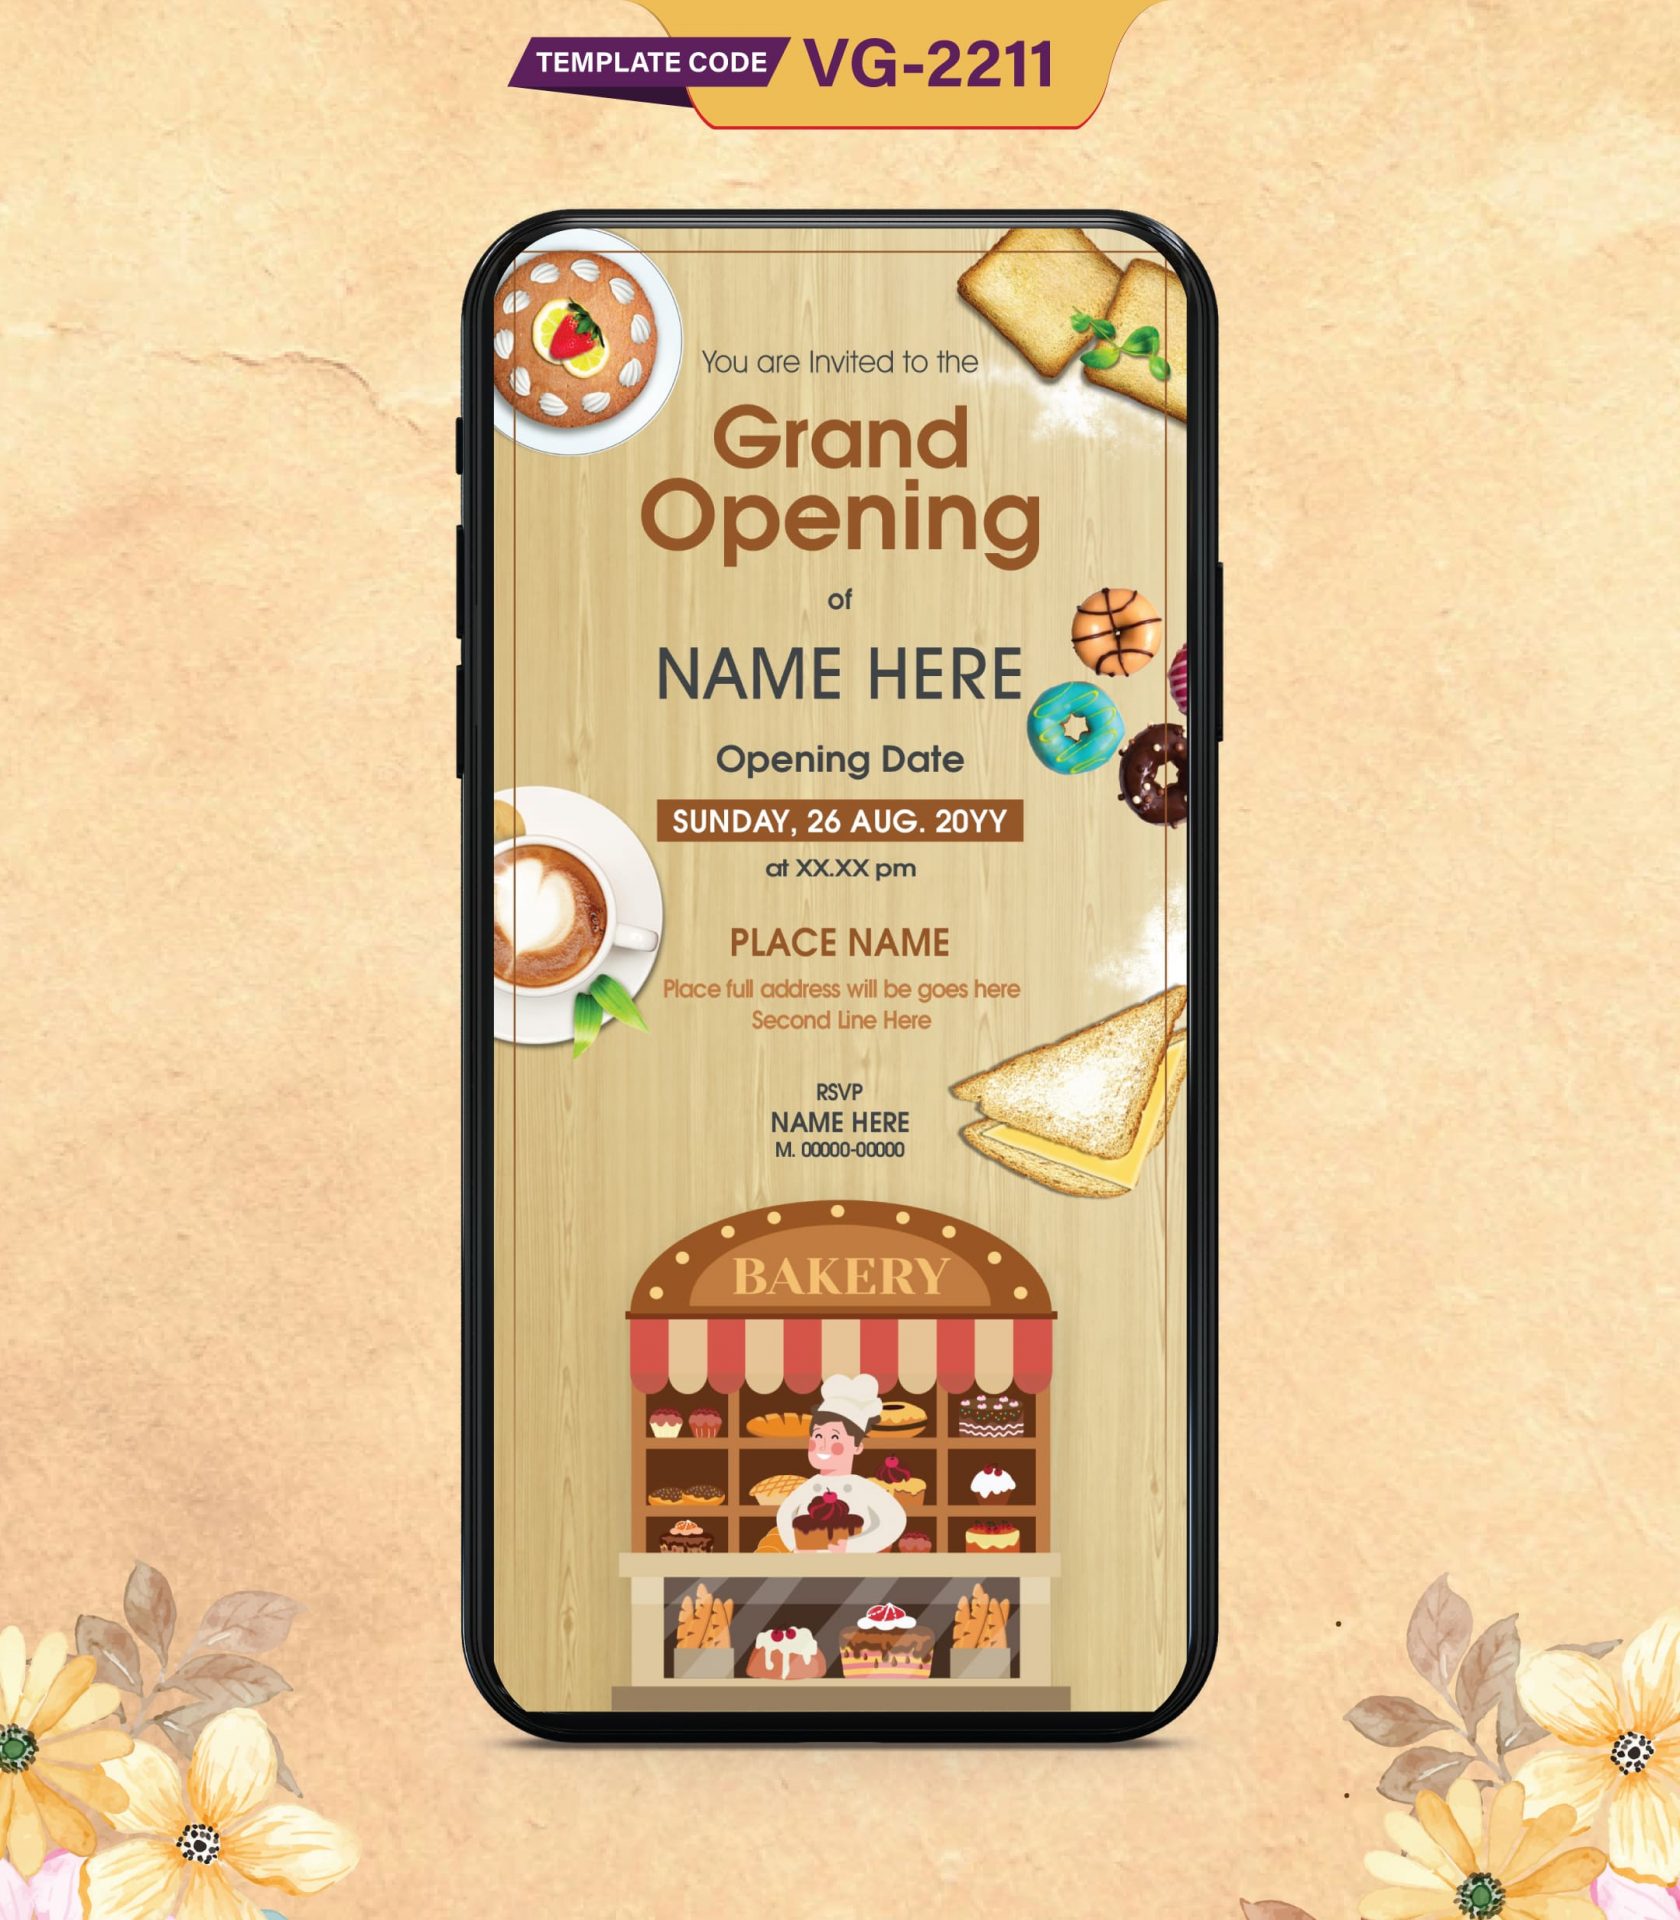 Bakery Grand Opening Invitations